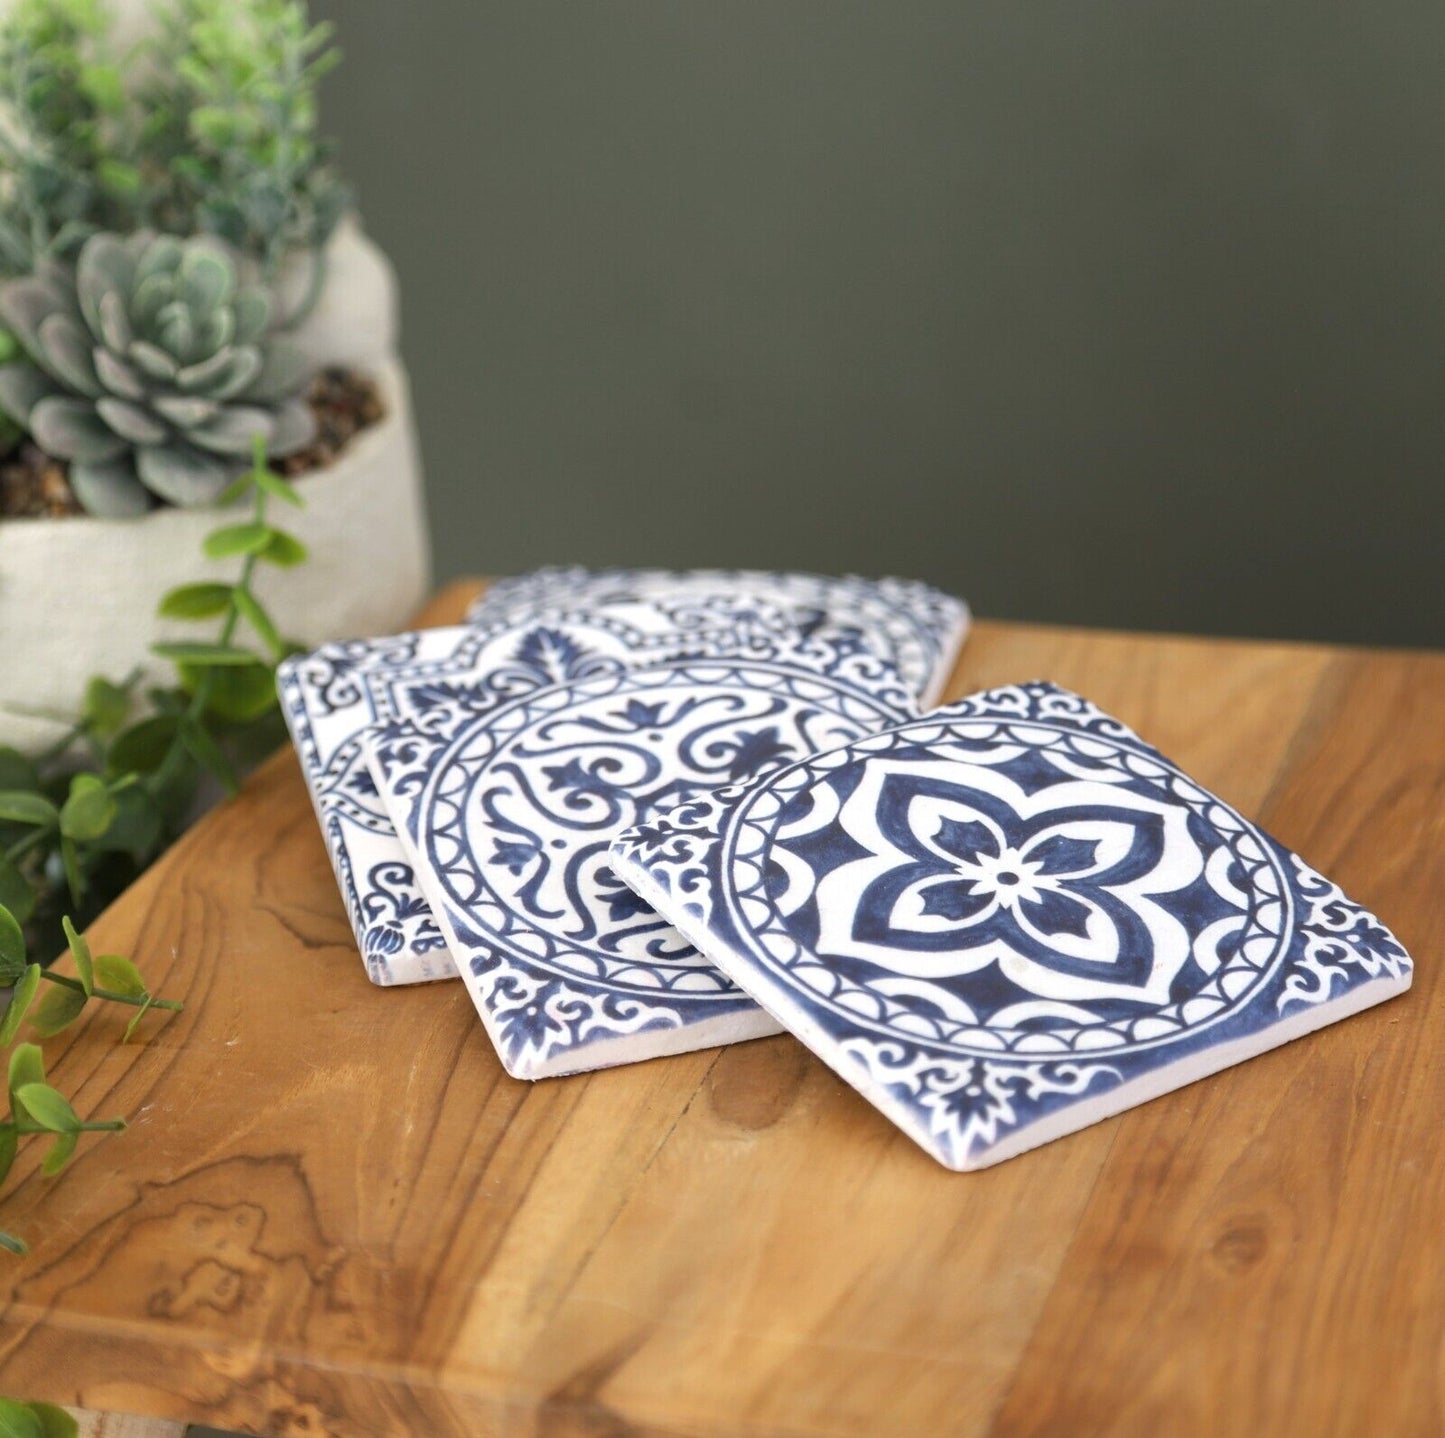 Ceramic Coasters Set of 4 Blue Geometric Tiles Cork Backed Coasters Table Mats